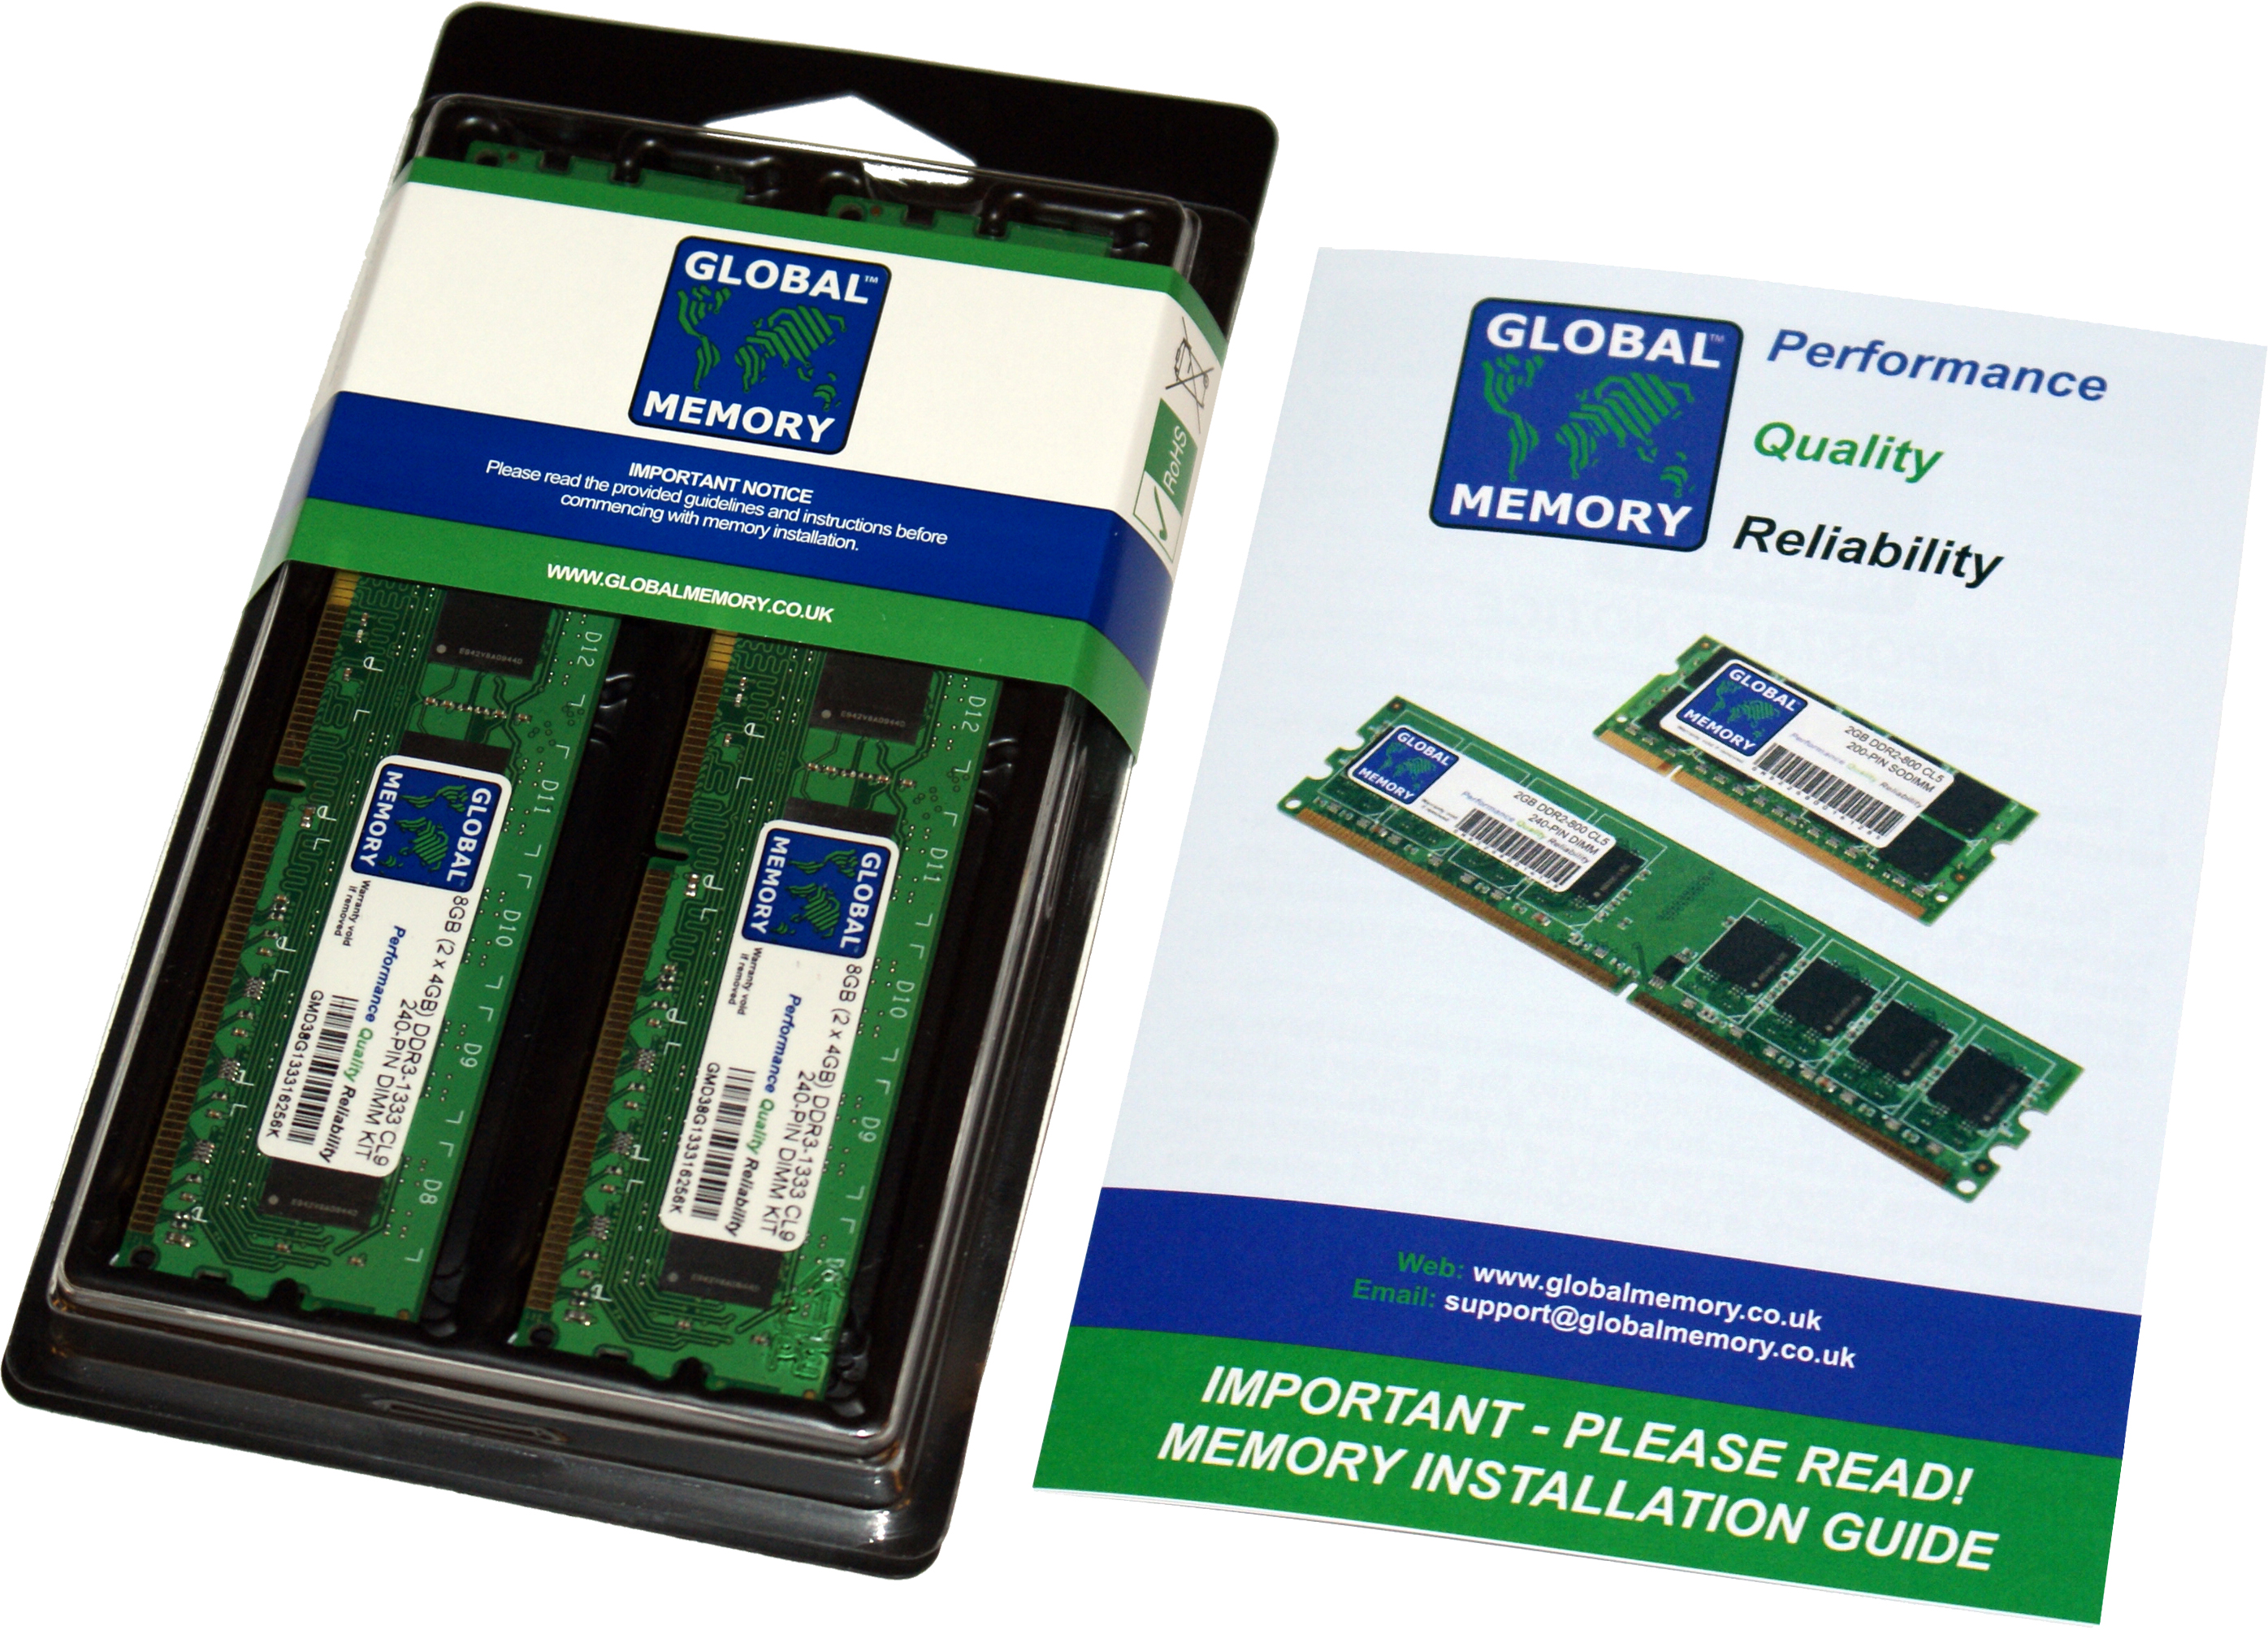 32GB (2 x 16GB) DDR4 2400MHz PC4-19200 288-PIN DIMM MEMORY RAM KIT FOR PC DESKTOPS/MOTHERBOARDS